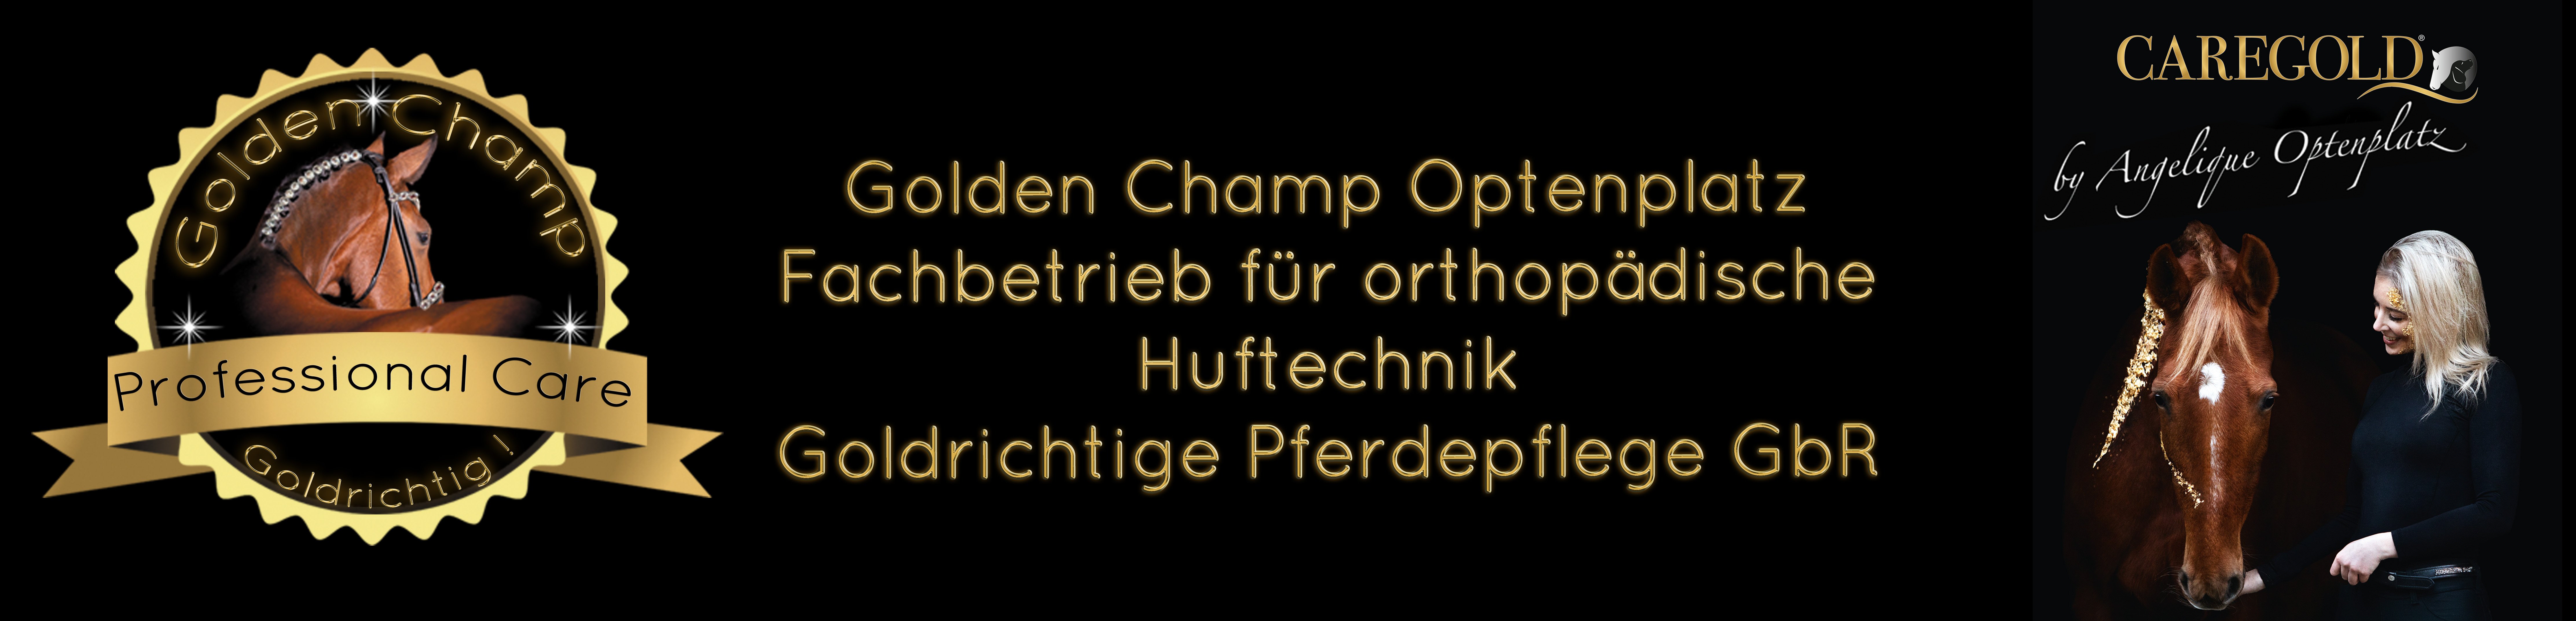 Golden Champ Optenplatz / Caregold Angelique Optenplatz